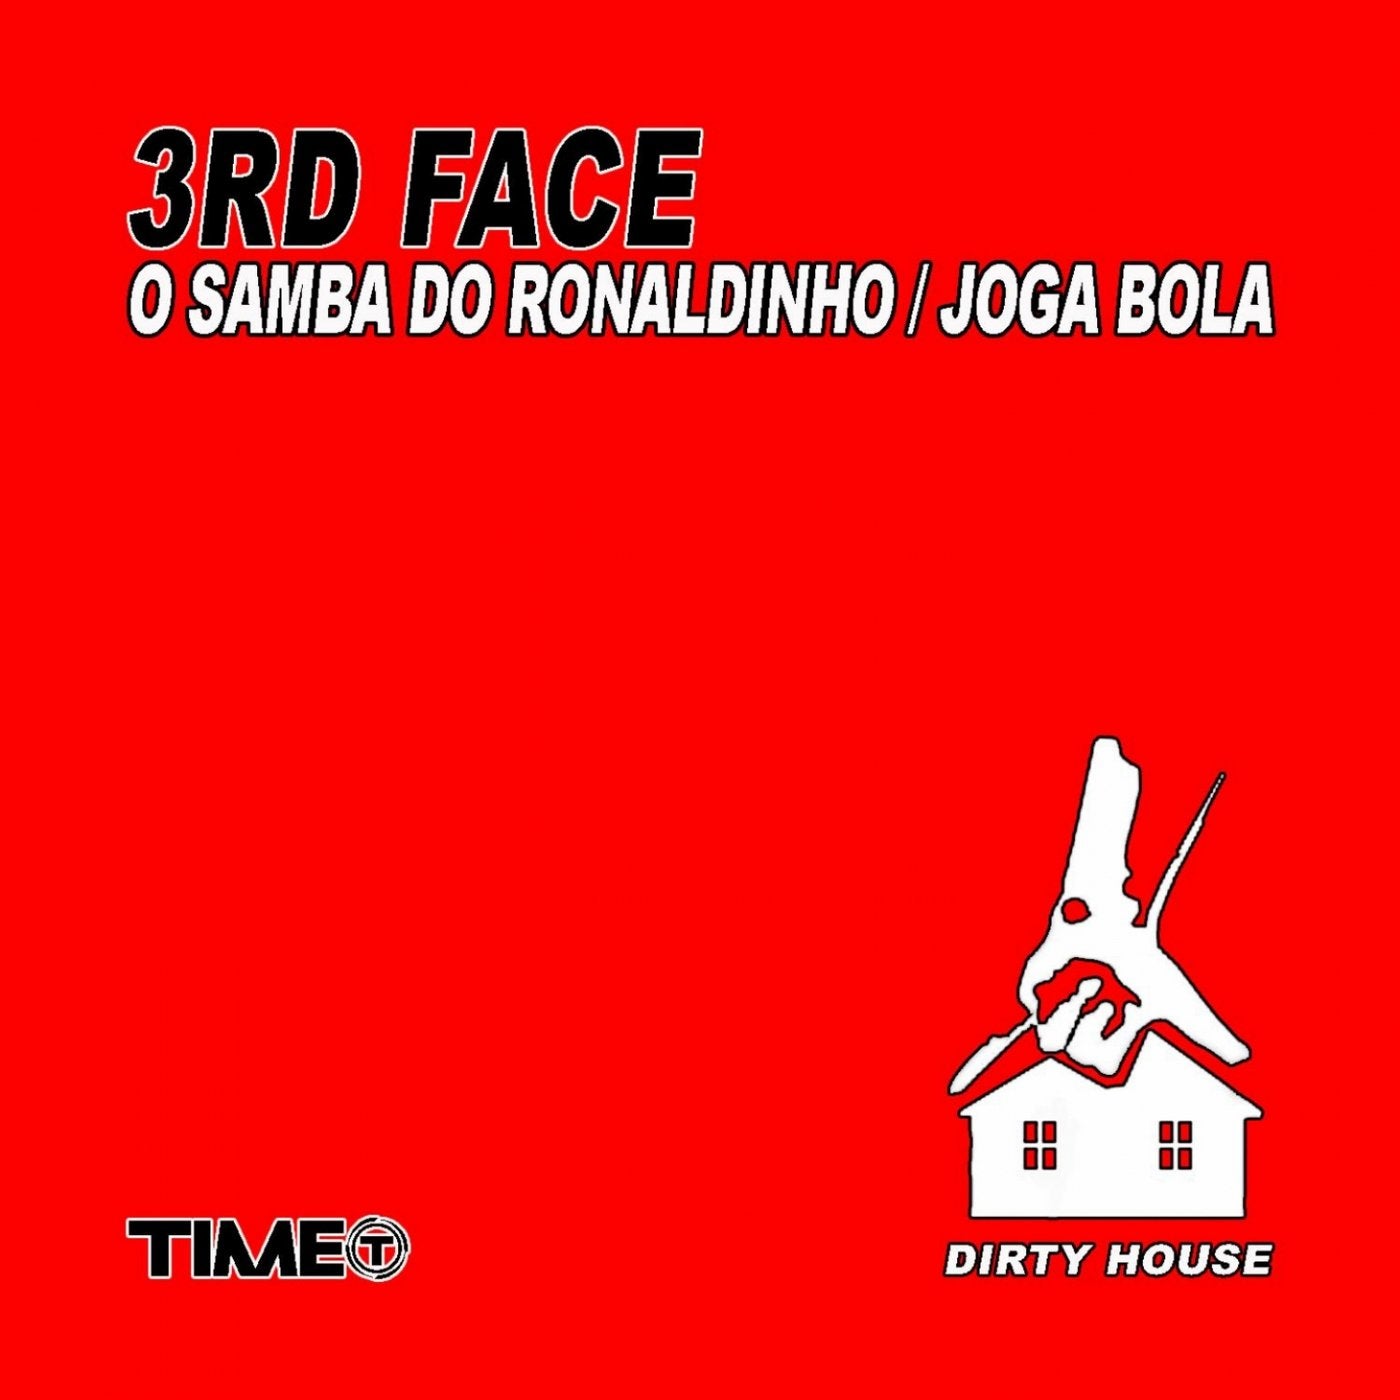 O Samba do Ronaldinho / Joga Bola